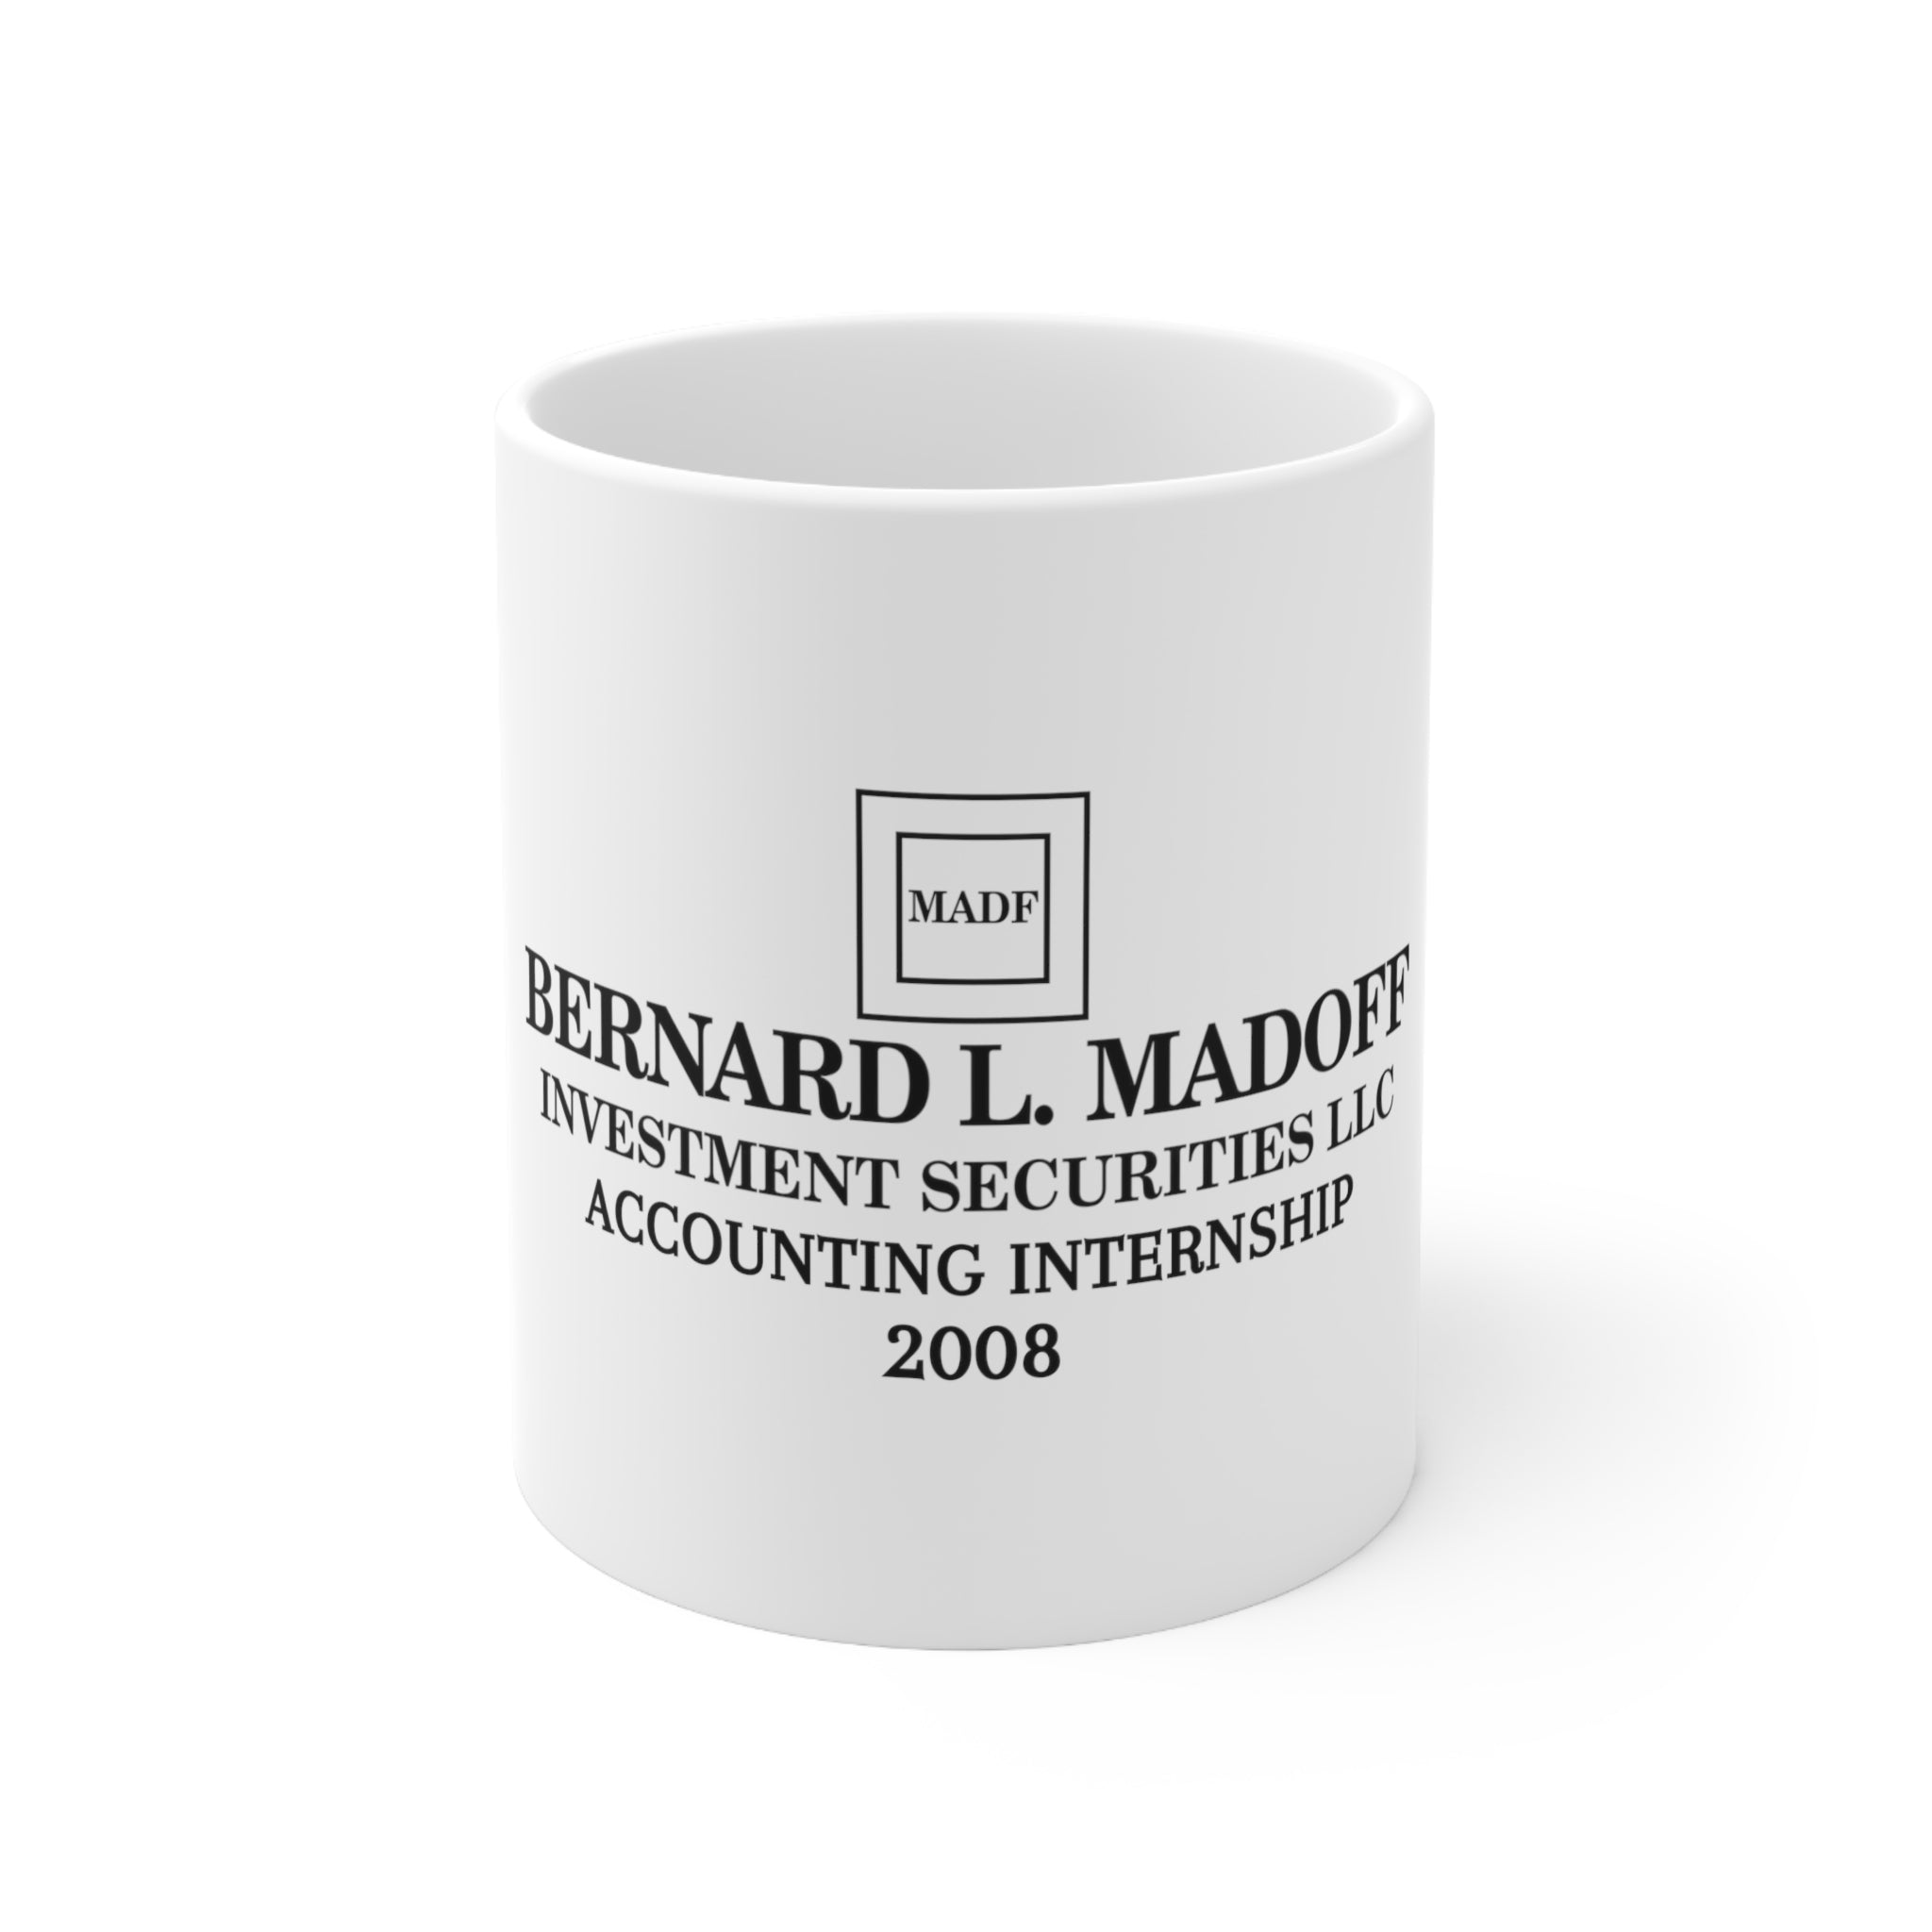 Bernie Madoff Accounting Internship 2008 - Ceramic Mug 11oz